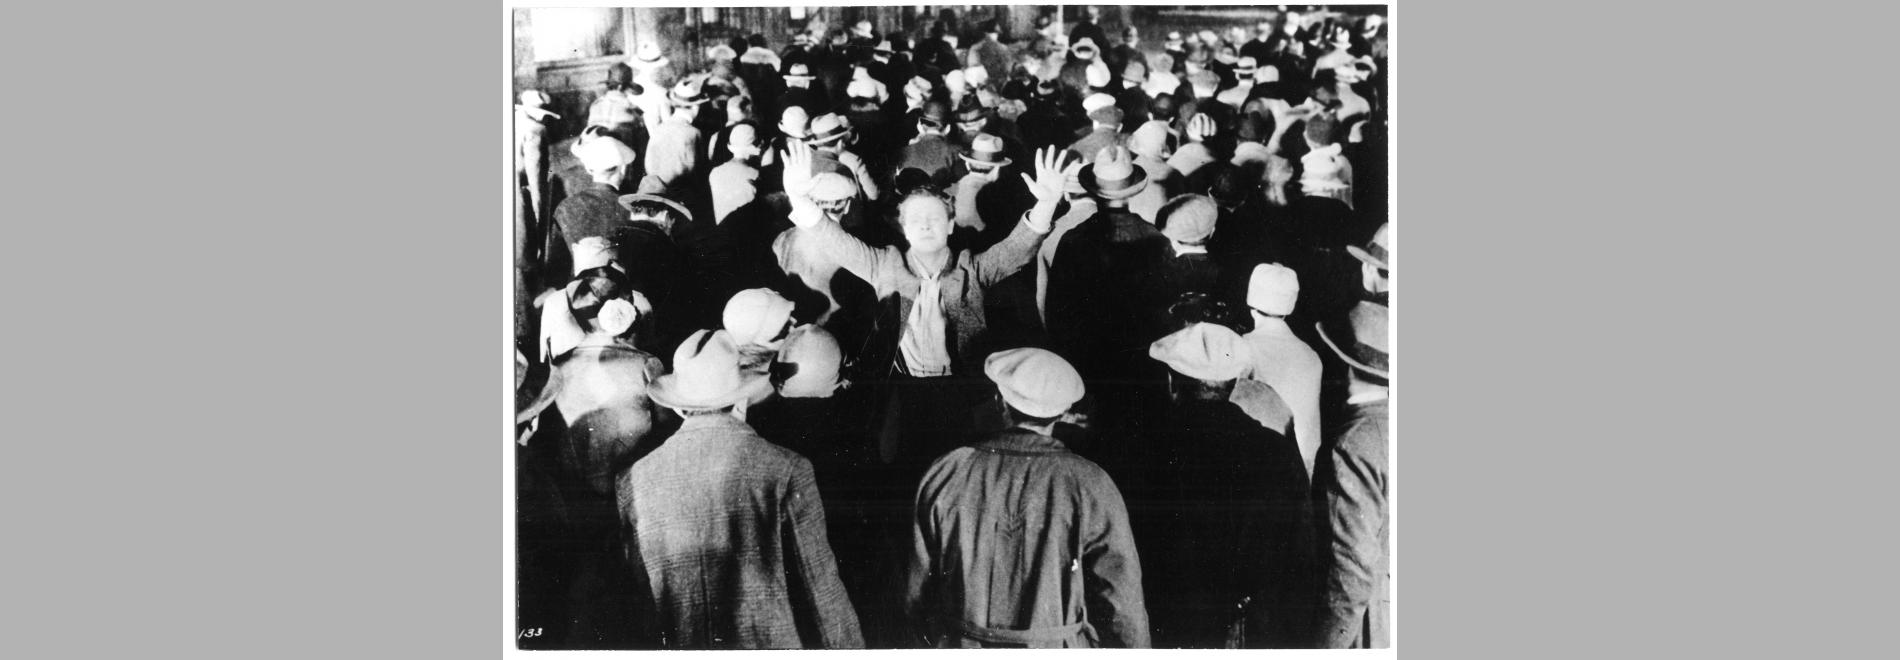 The Crowd (King Vidor, 1928)